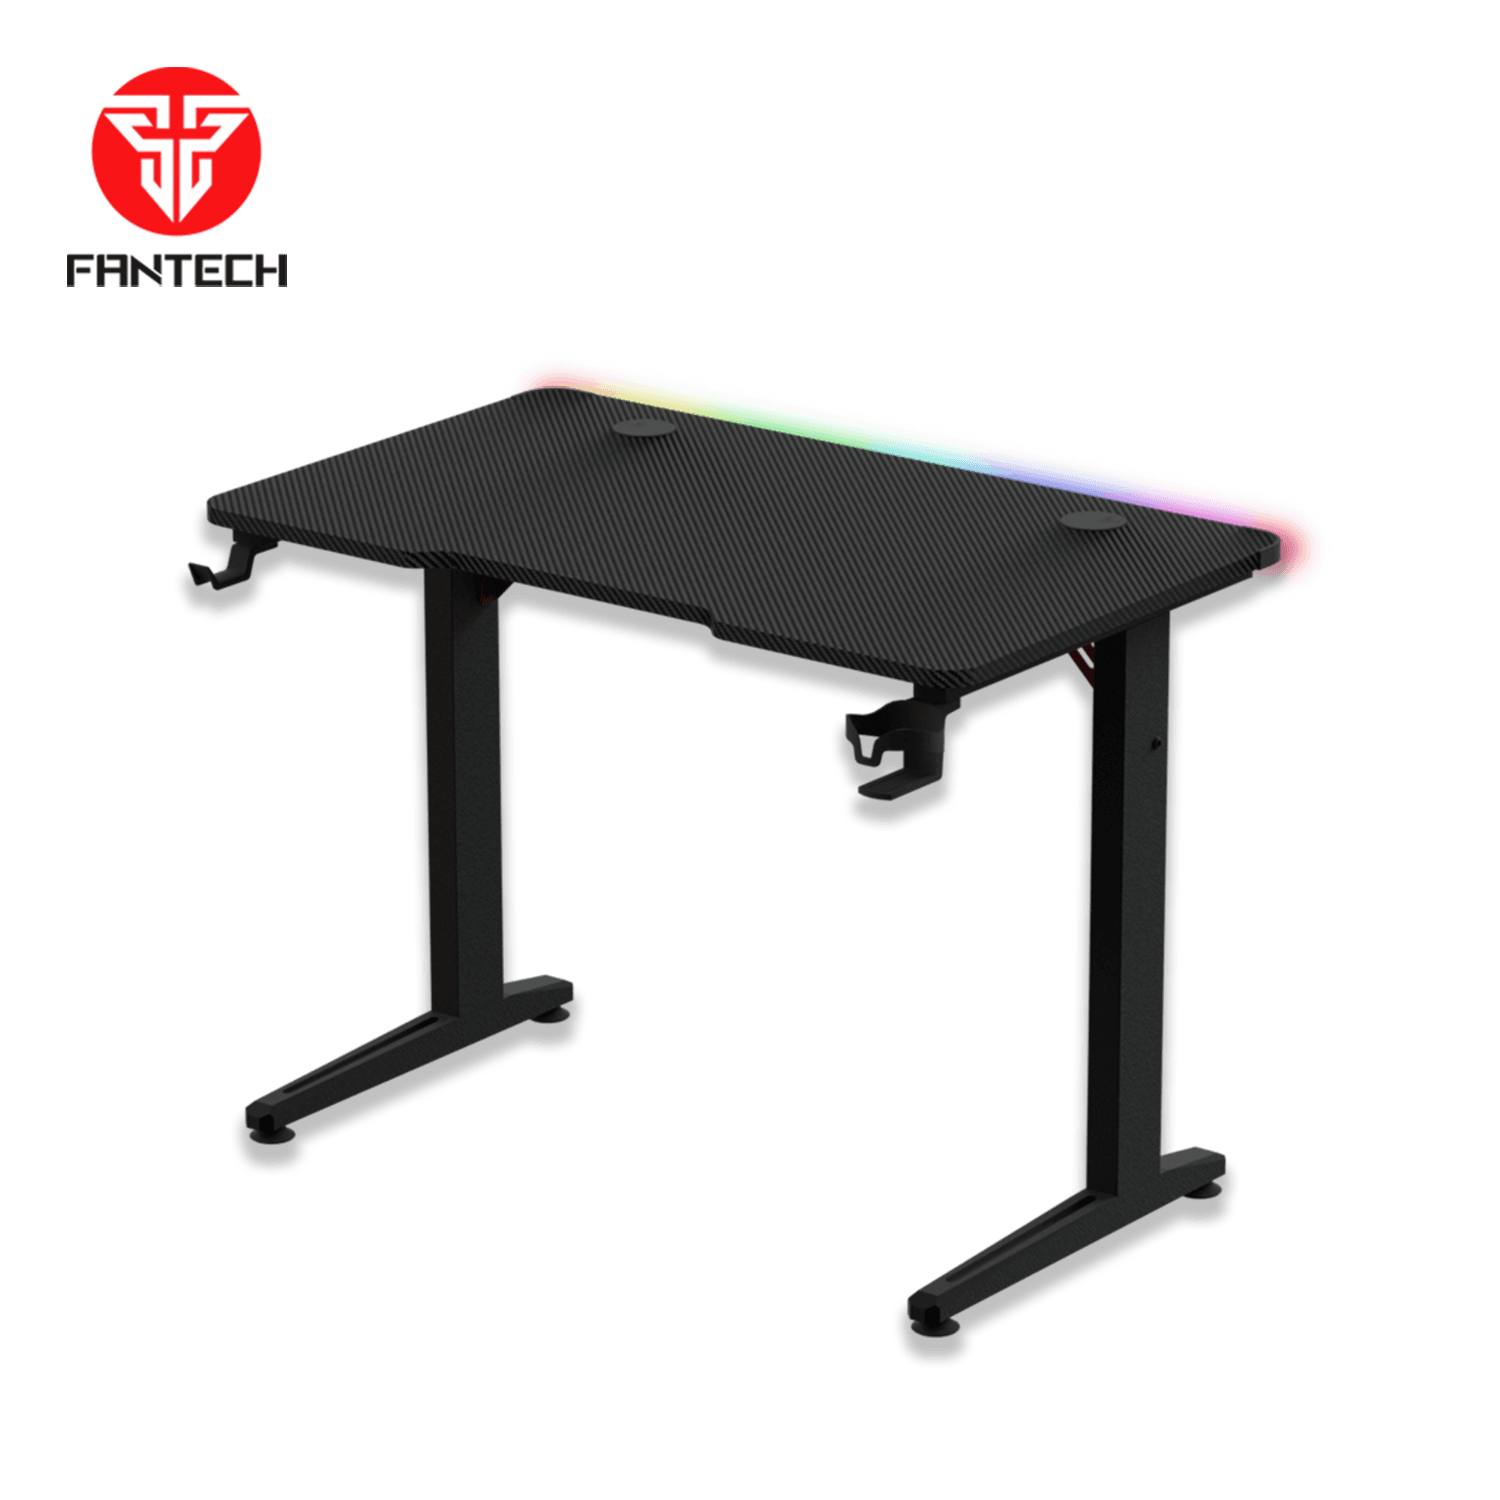 Fantech Tigris GD210 Gaming Desk RGB Illumination Premium and Sleek Large